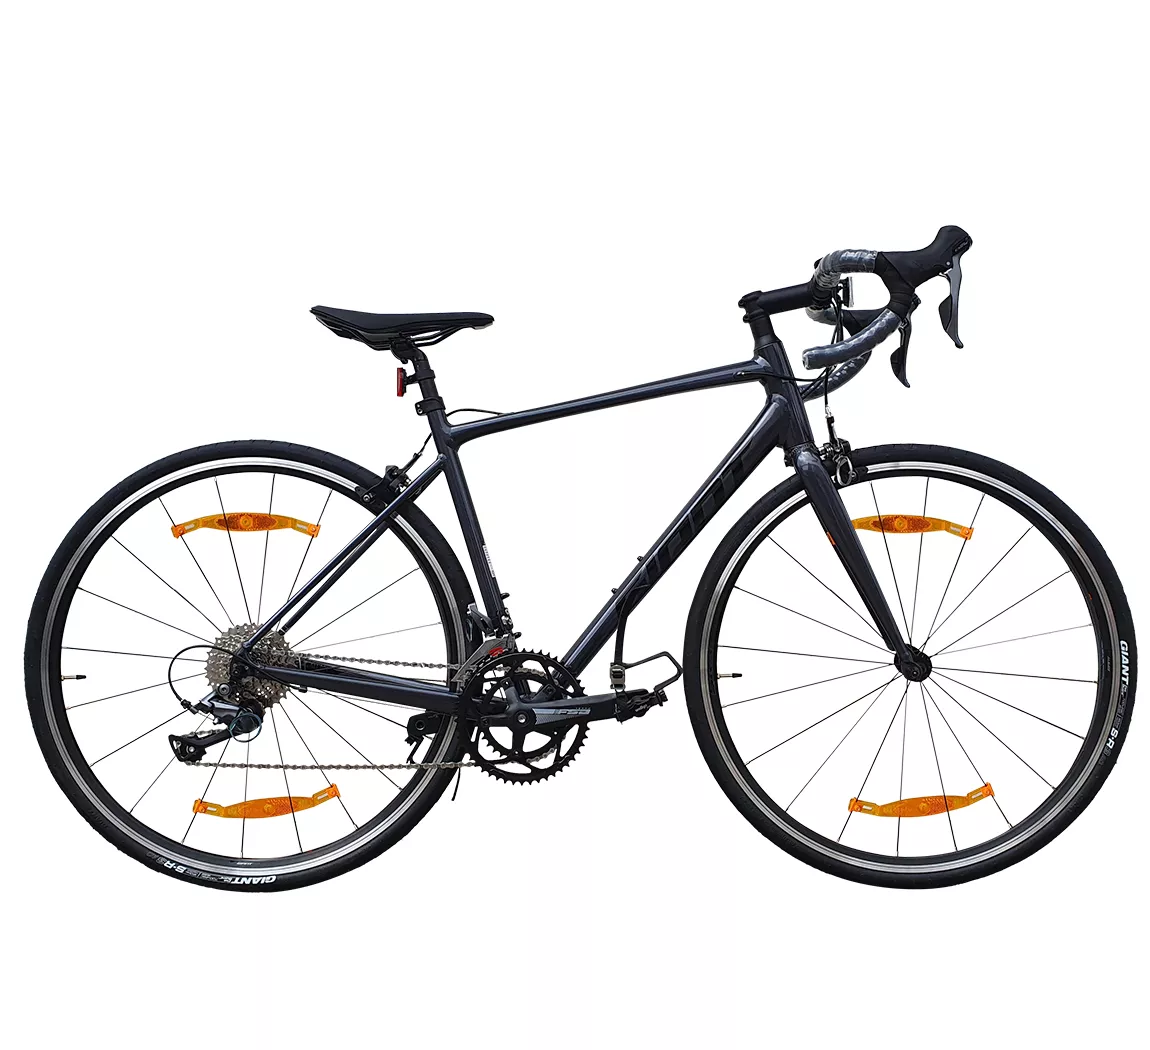 Giant Bicicleta Contend 3 Aro 700x28c 8 Vel color Black